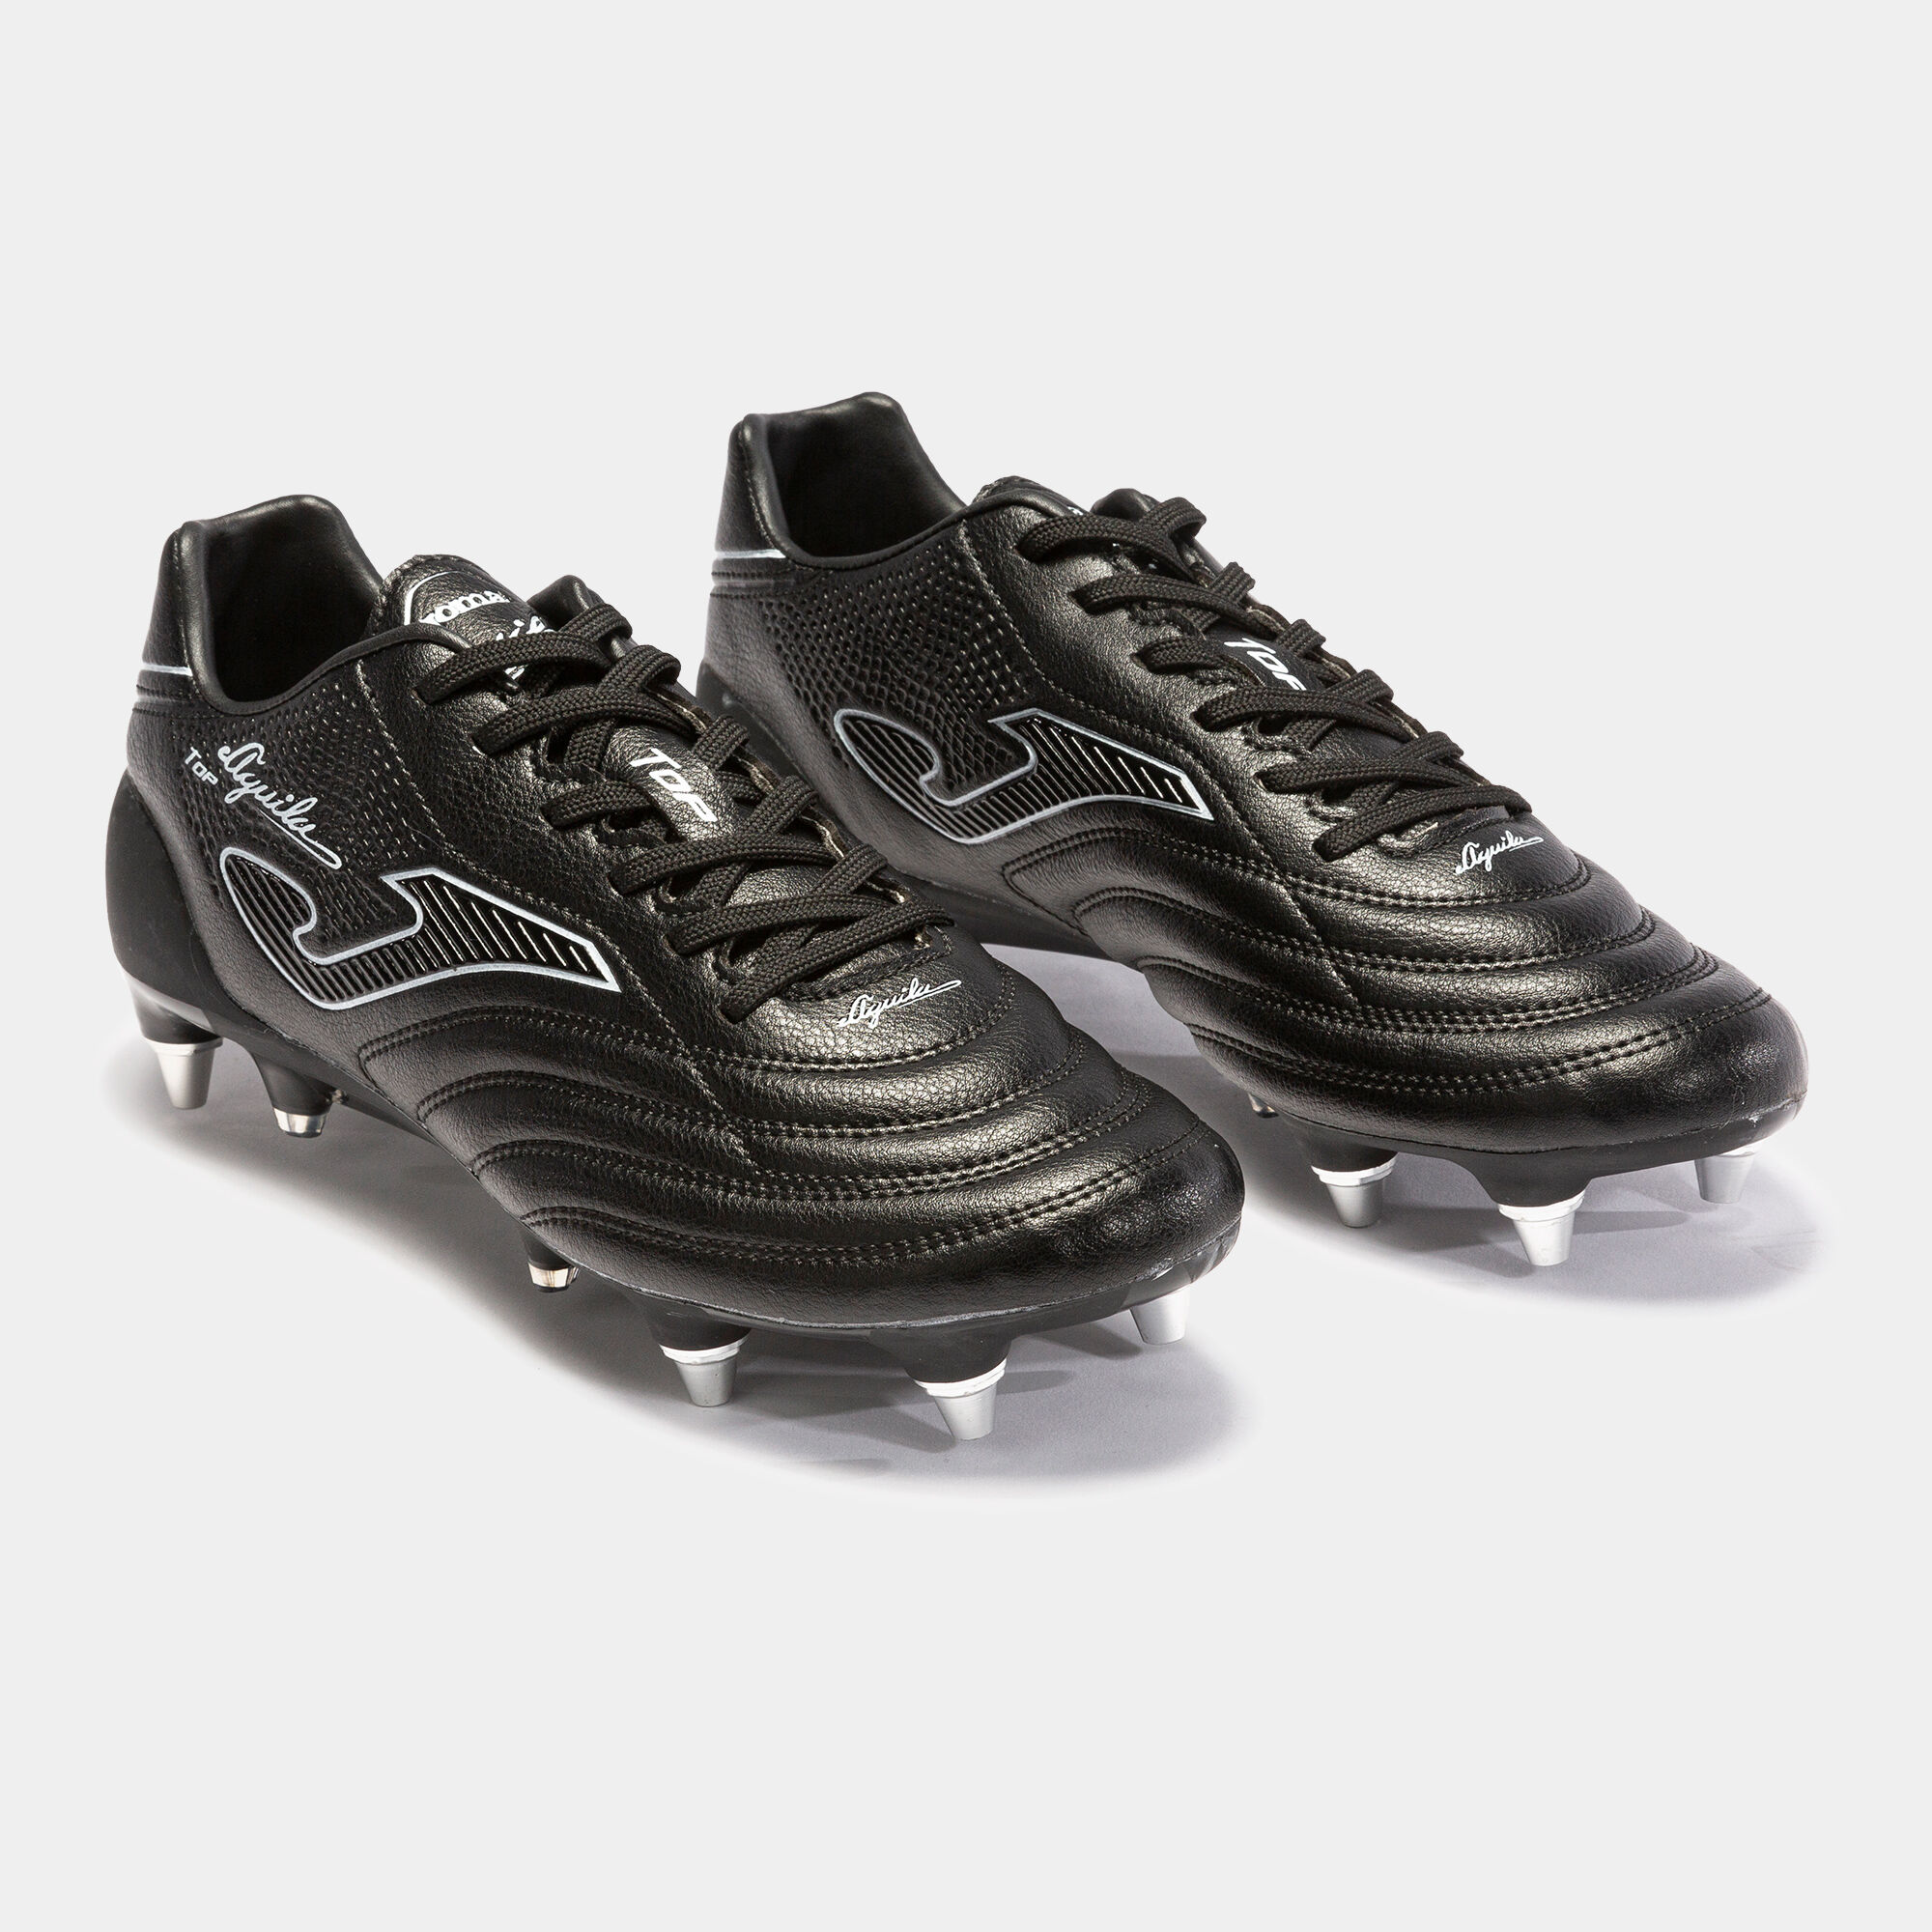 Chaussures football Aguila Top 21 terrain souple SG noir